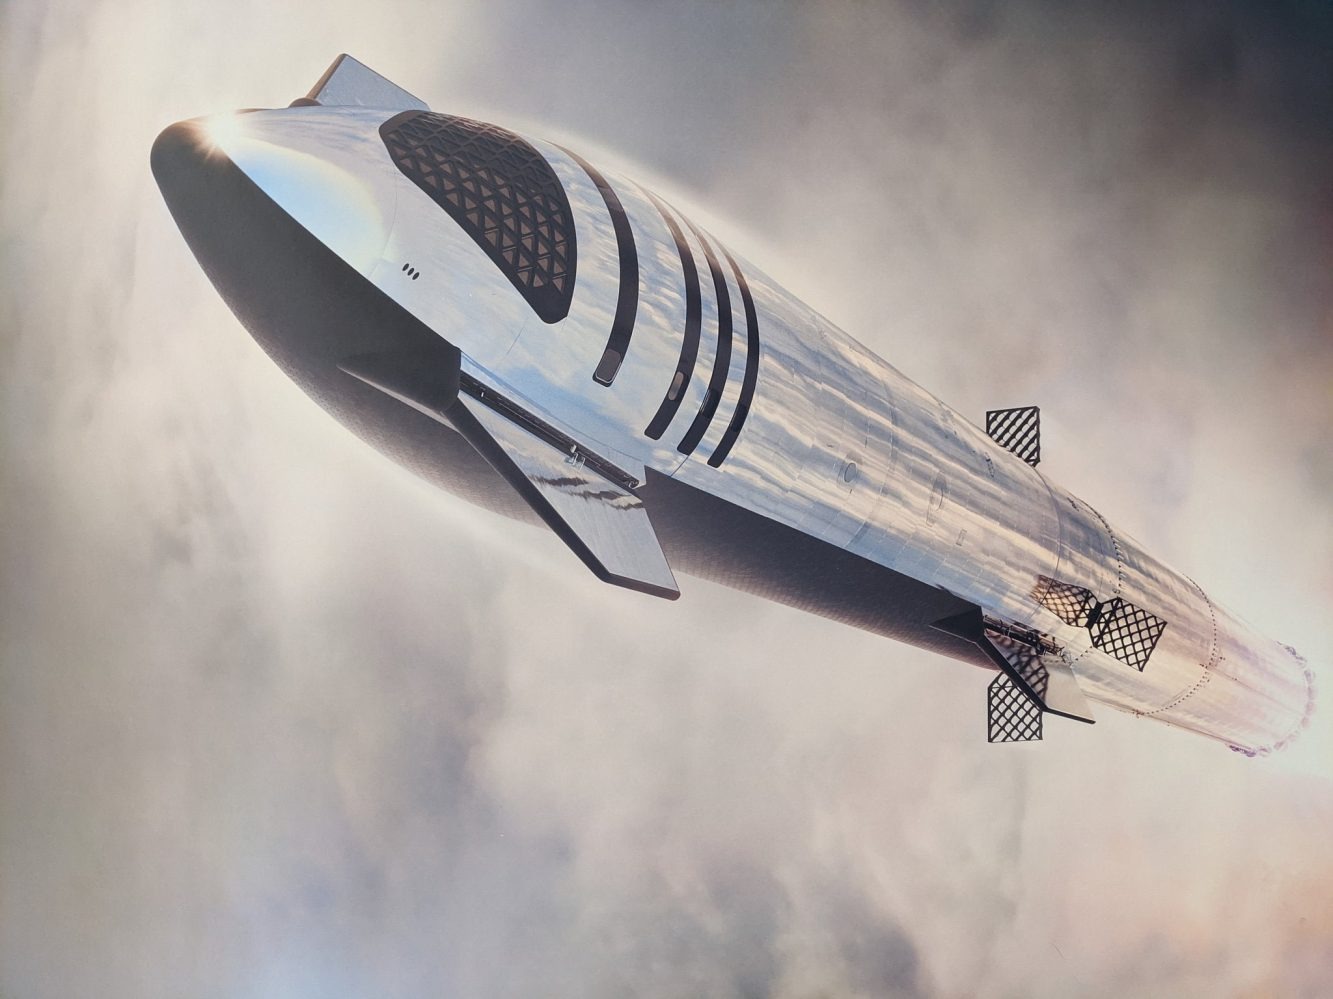 Ілюстрація польоту Starship із ракетою-носієм Super Heavy